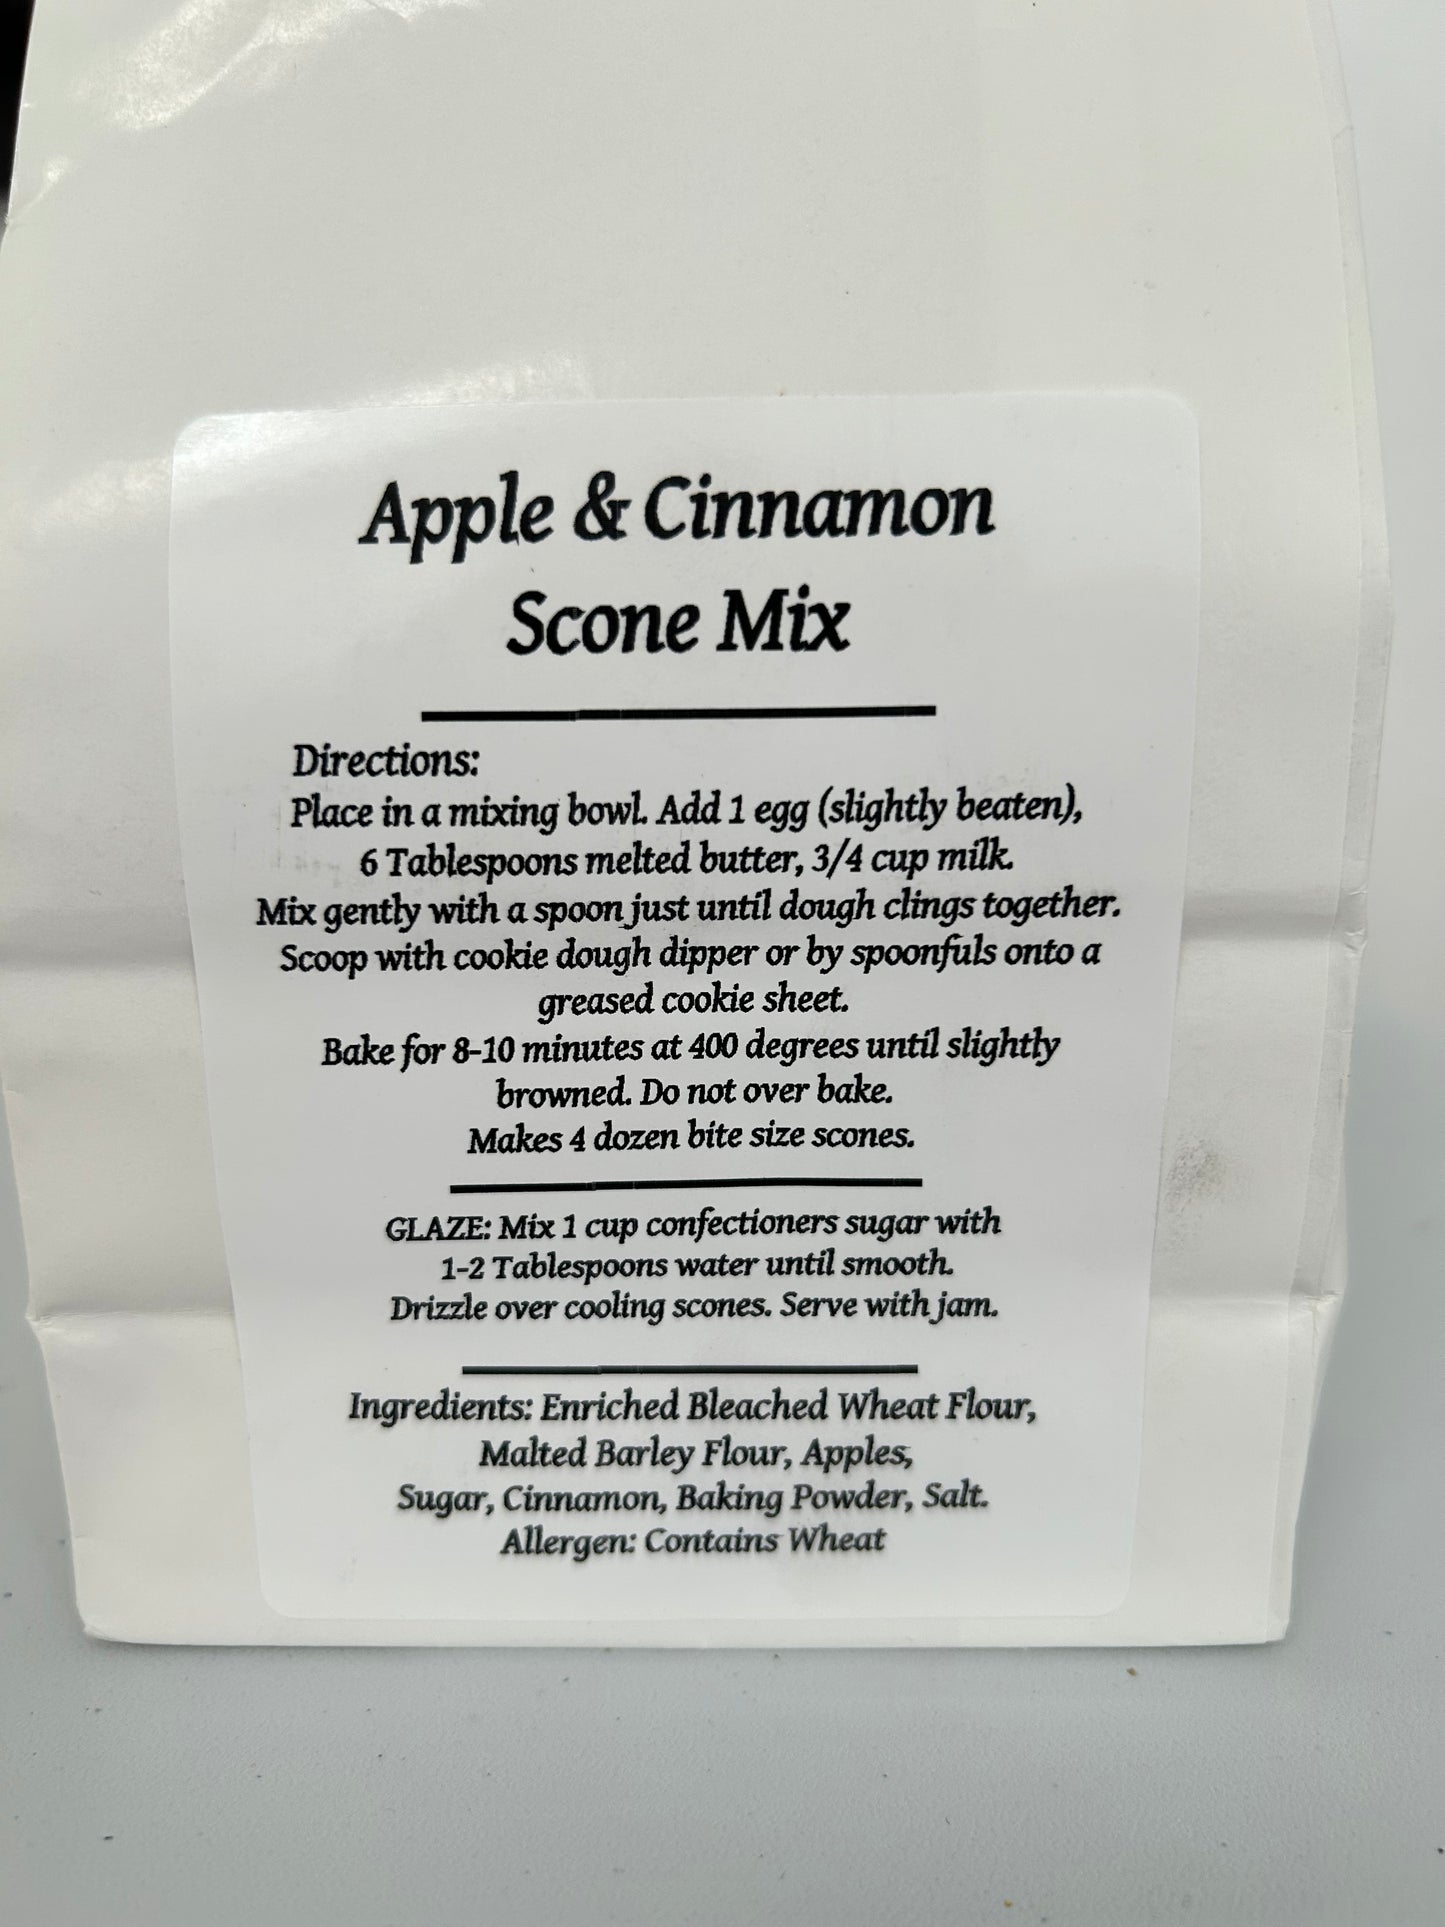 Jill's Apple & Cinnamon Scone Mix